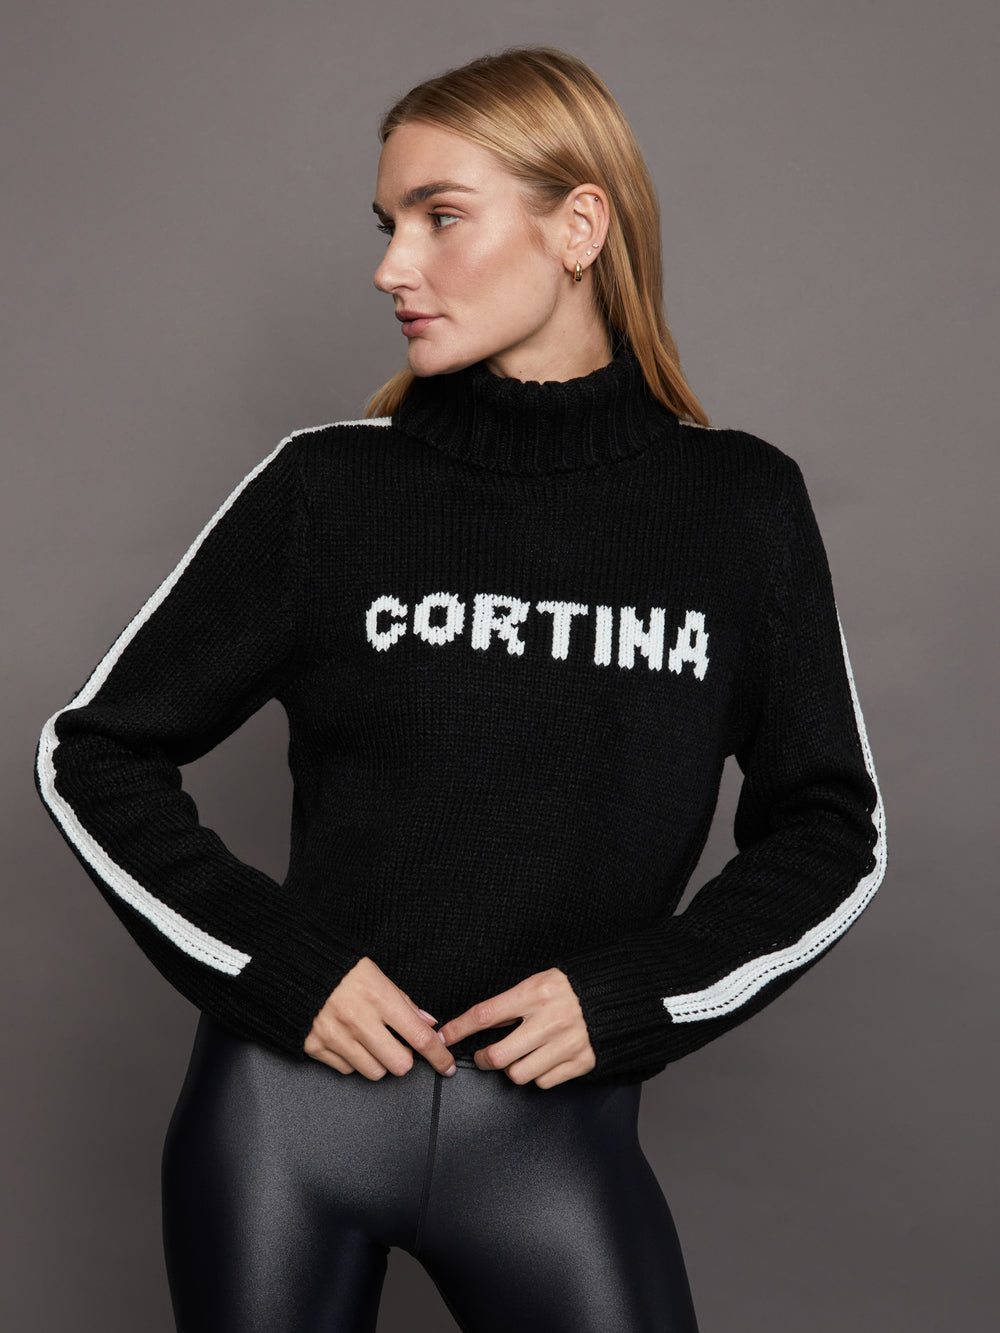 Cortina Turtleneck - Custom Knit Black